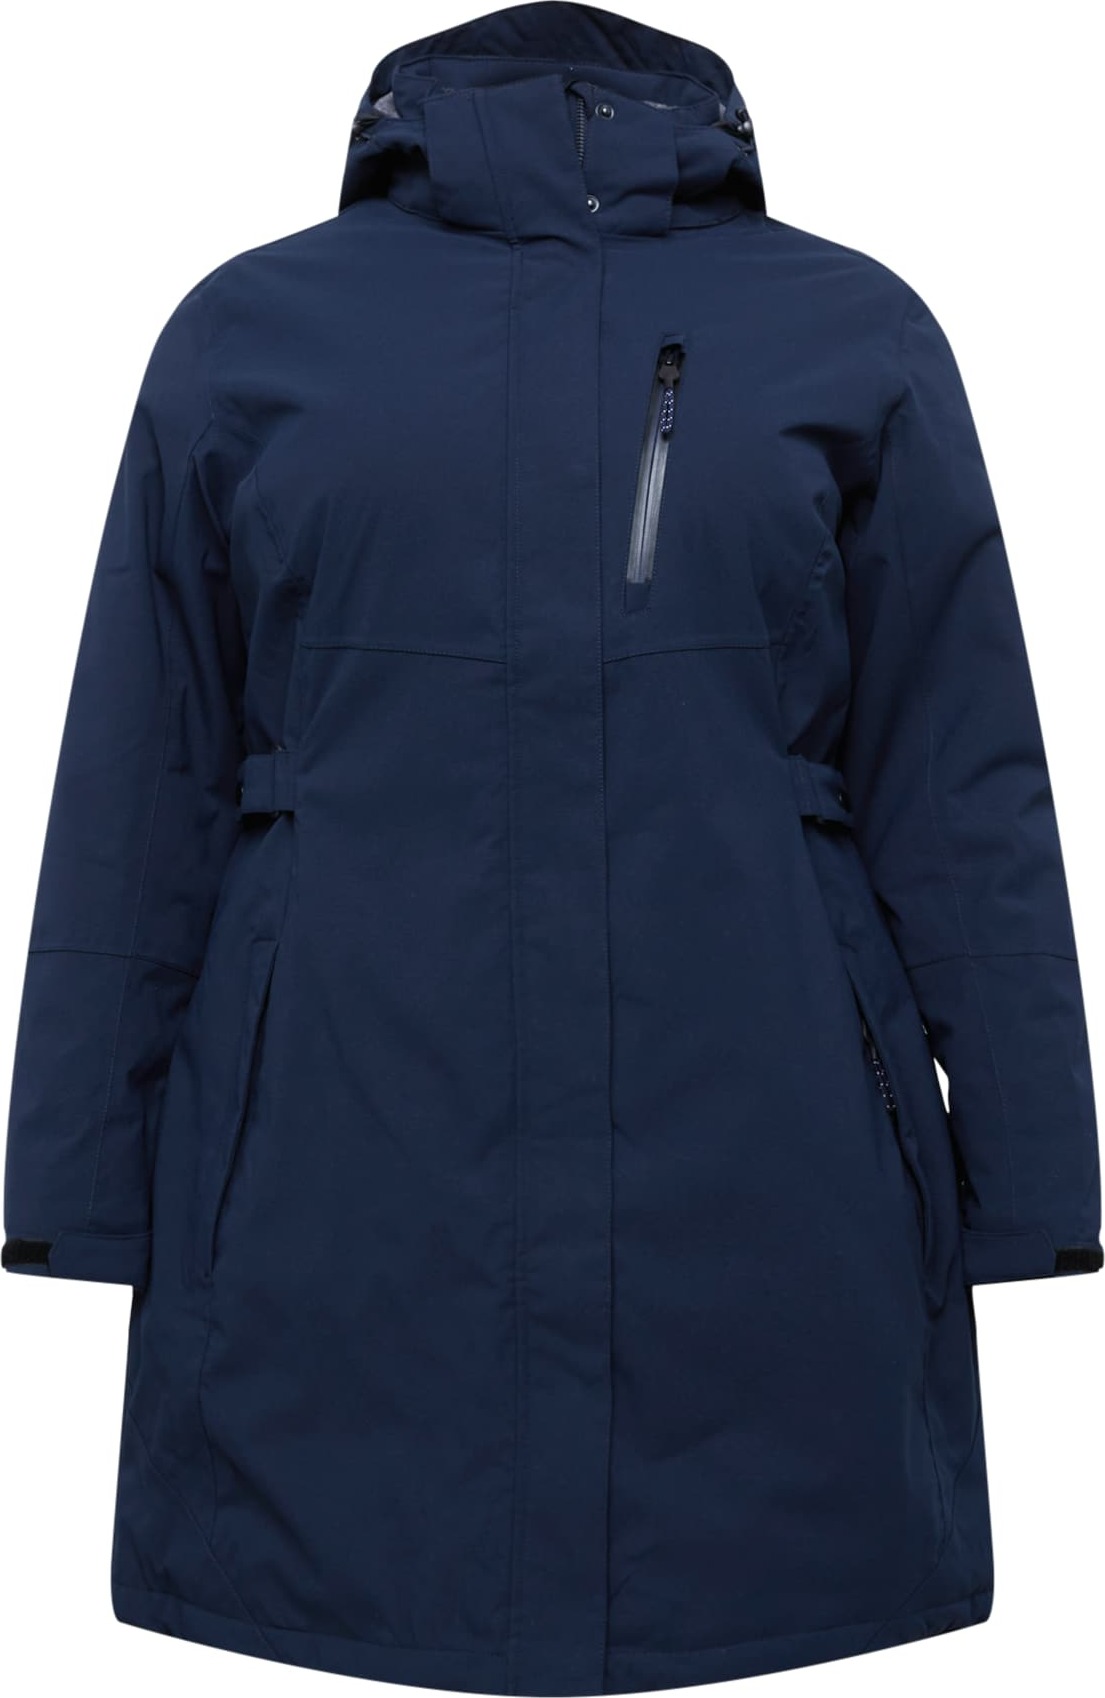 KILLTEC Outdoorová bunda námořnická modř